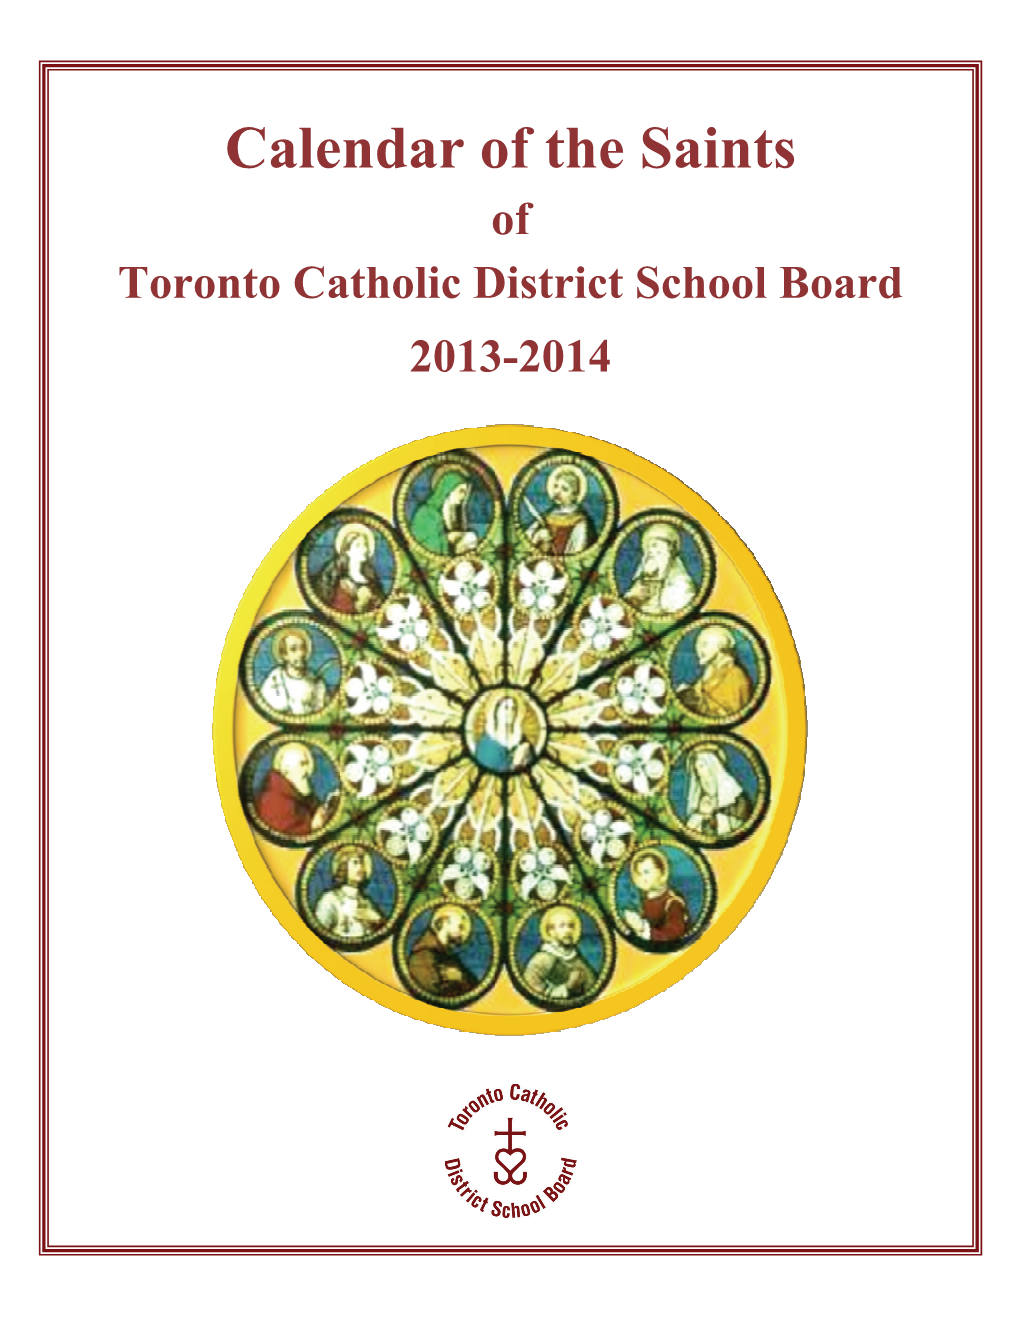 Calendar of the Saints of Toronto Catholic District School Board 2013-2014